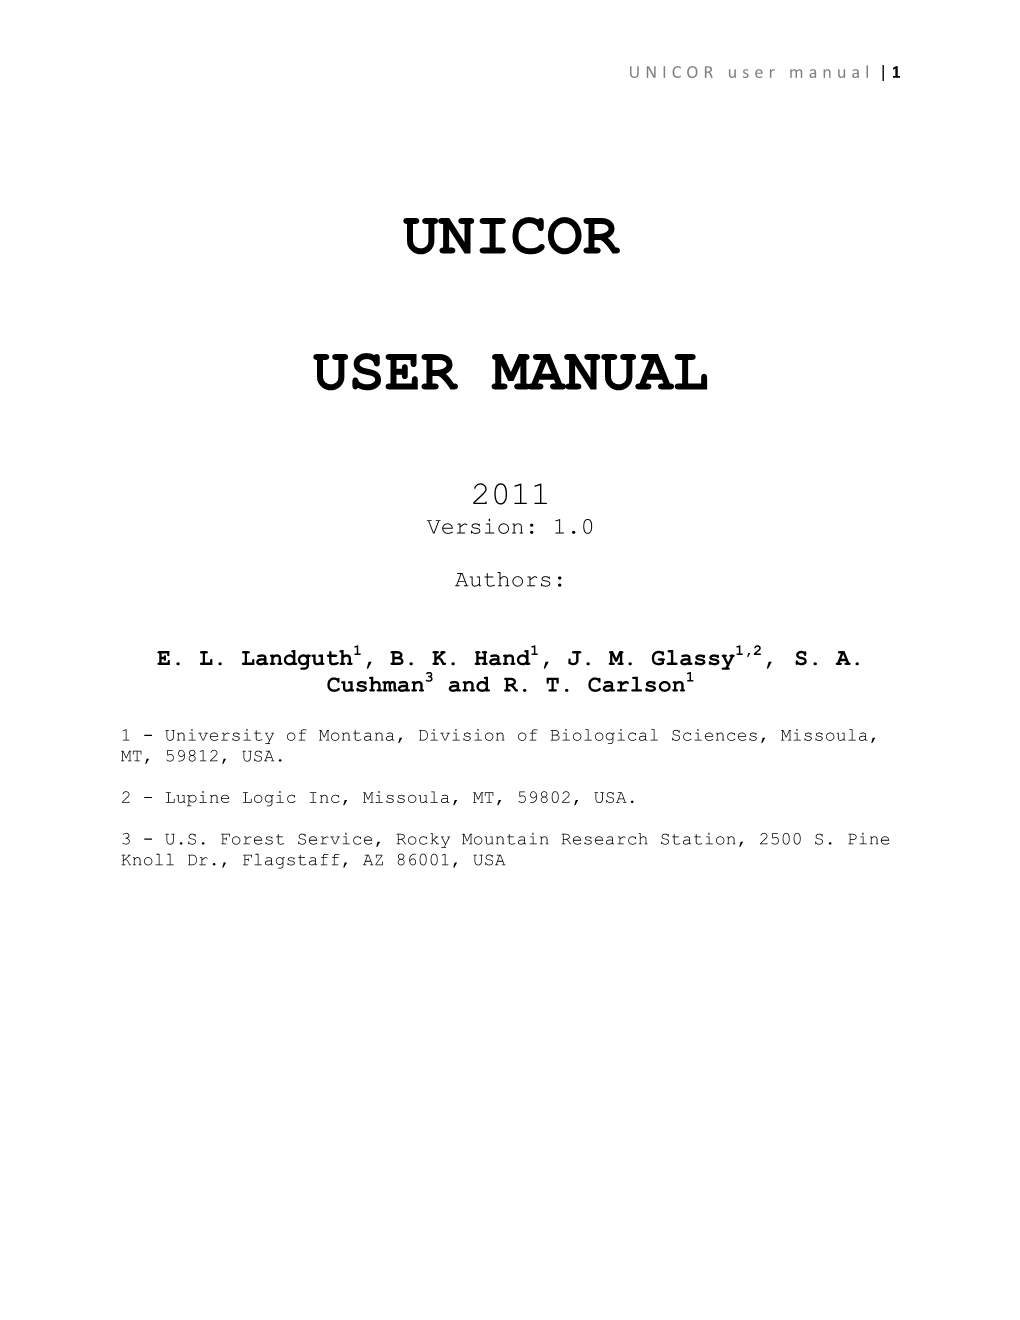 UNICOR Users Manual